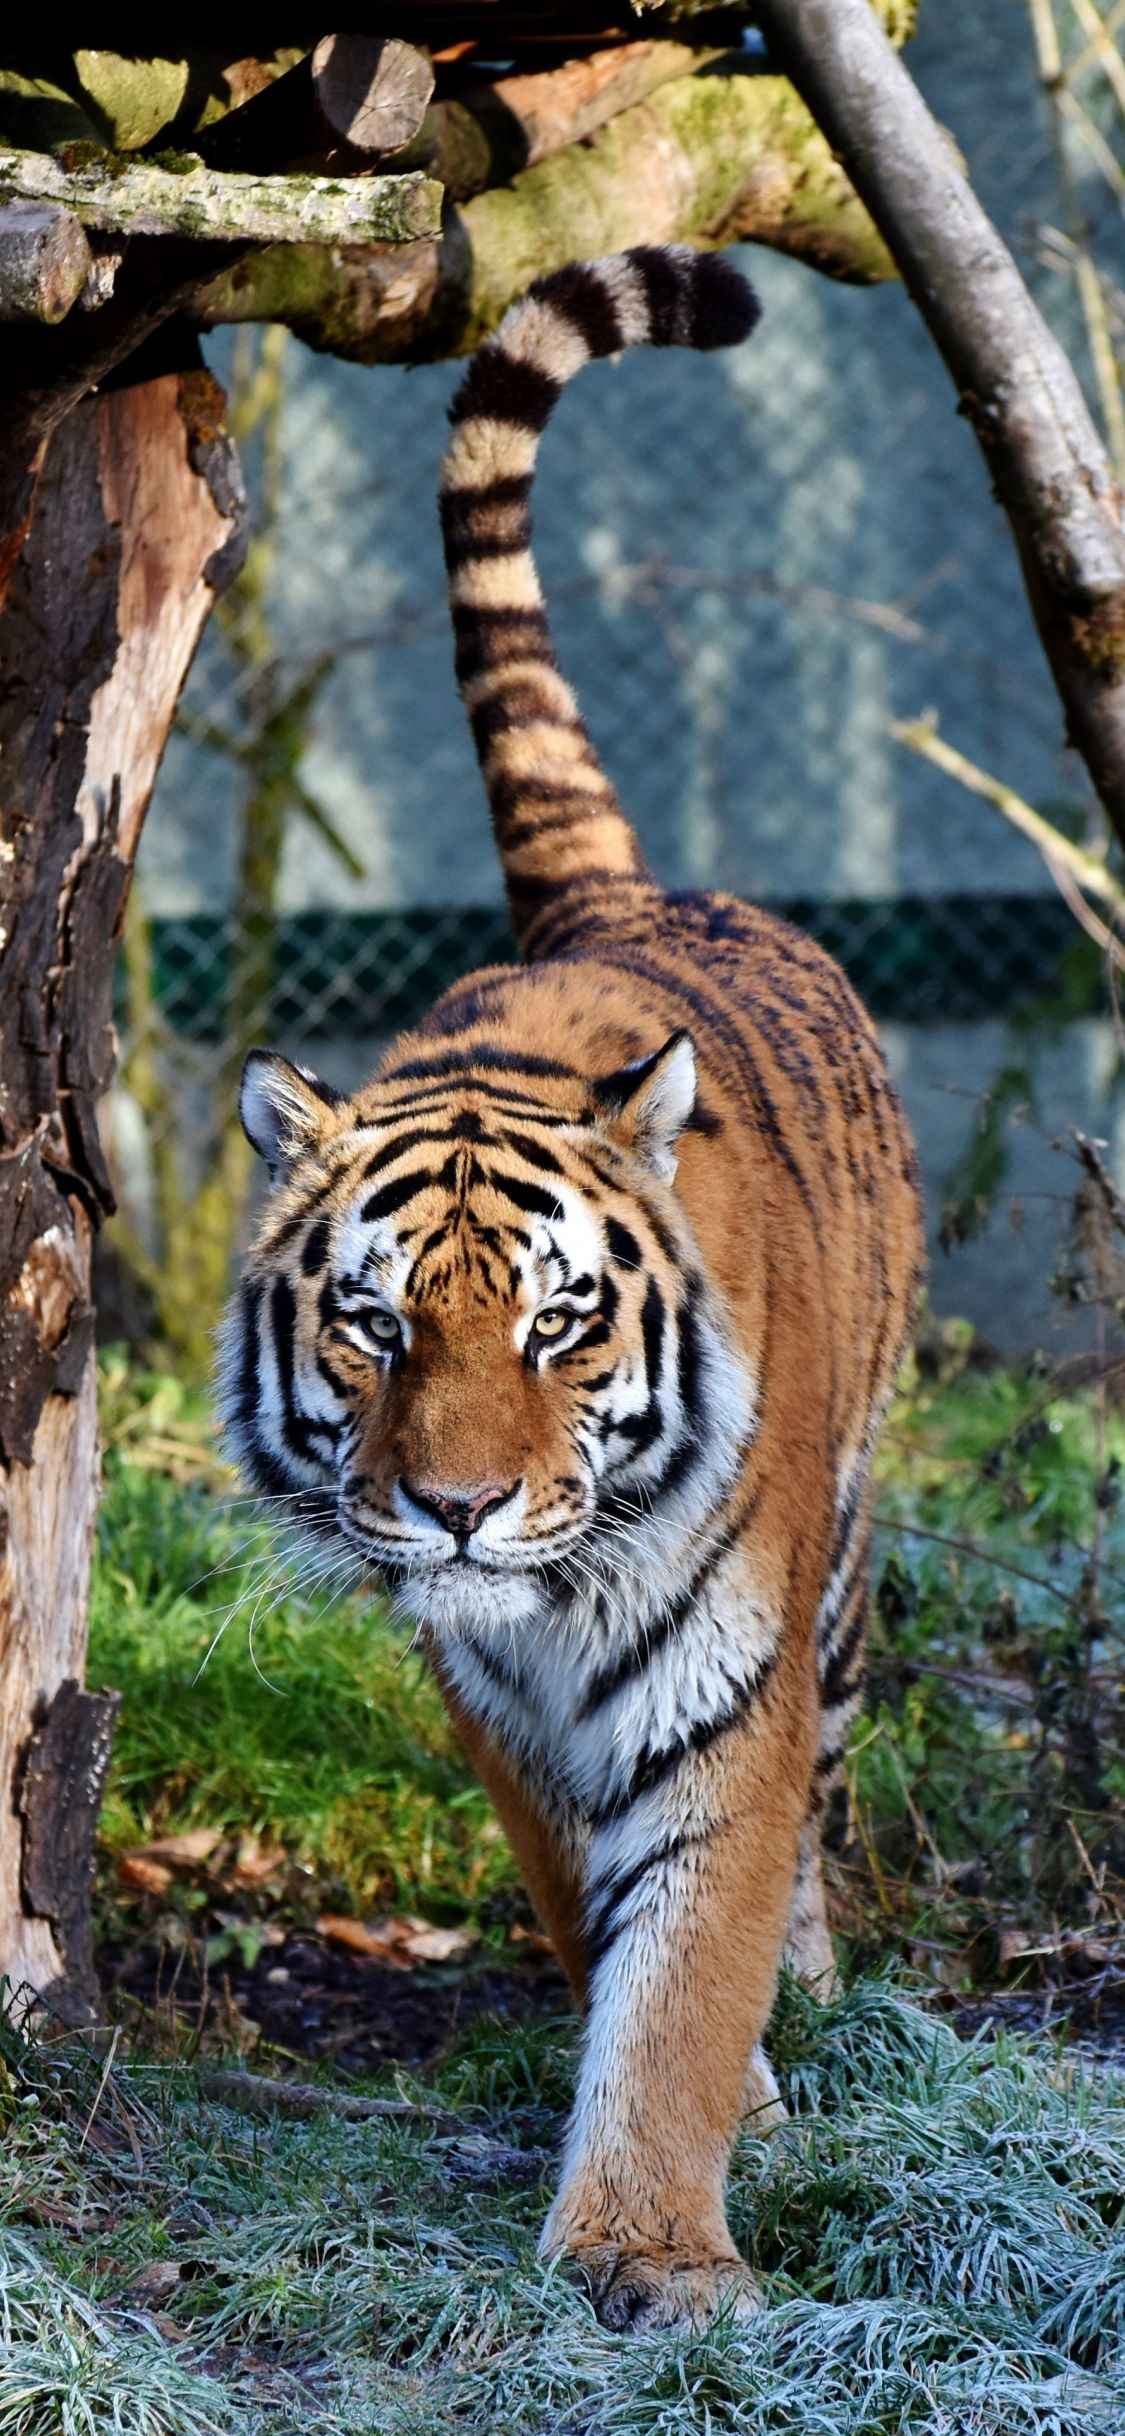 Tiger on dark background stock photo. Image of majestic - 169159562